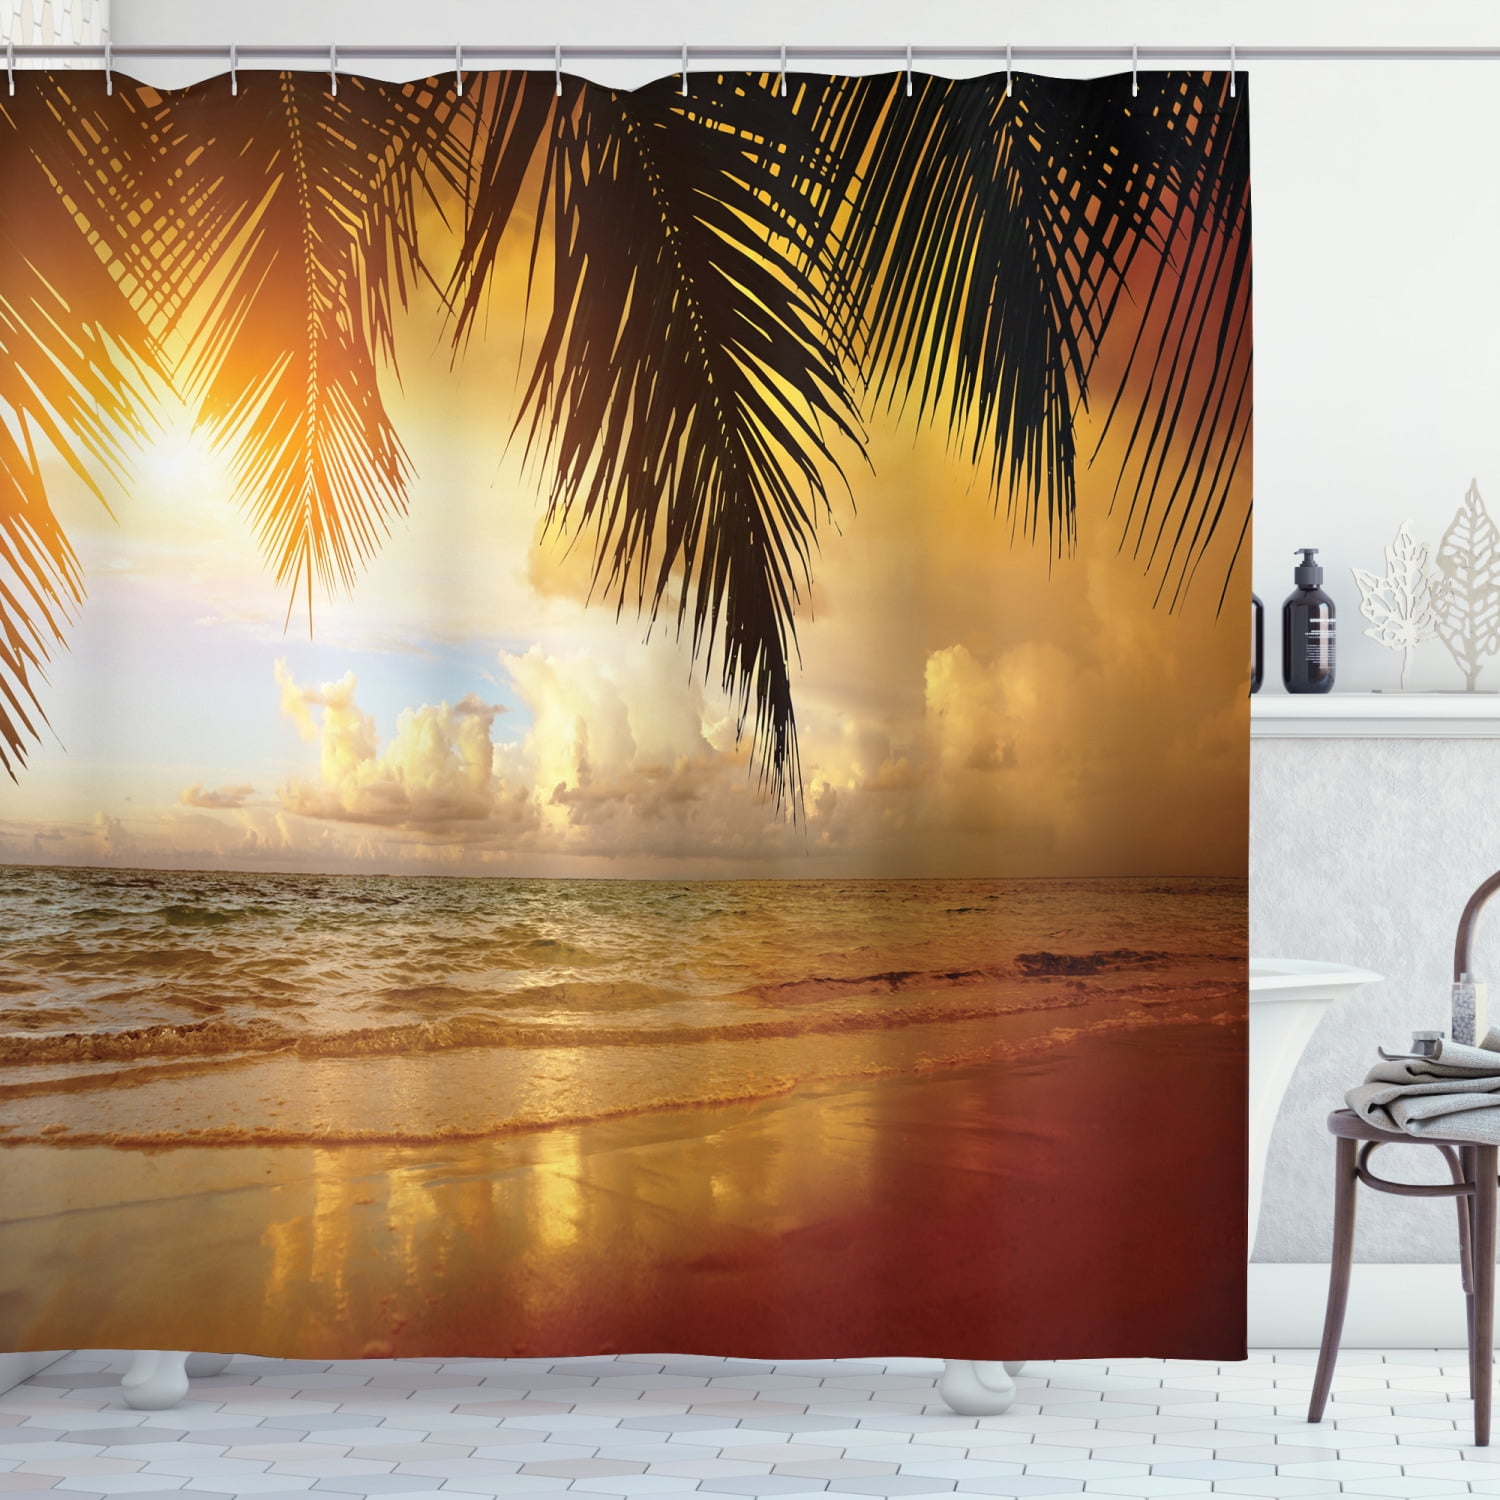 Ocean Sunset Scenery Palm Beach Shower Curtain Sets For Bathroom Decor w/ Hooks 